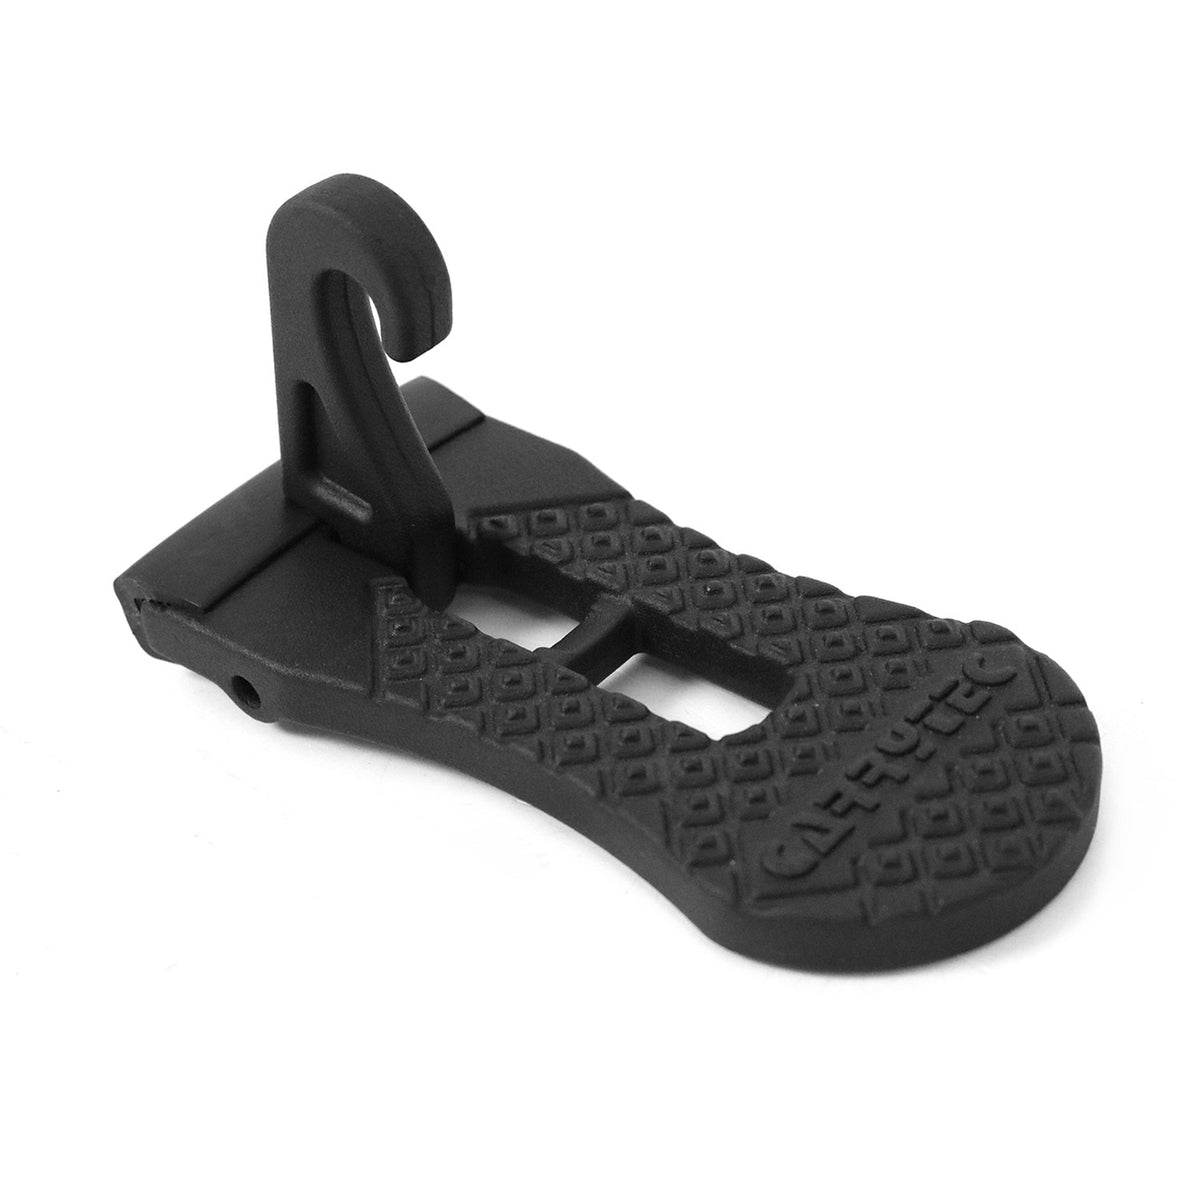 Door pedal footrest foldable for Mercedes Sprinter Citan Viano aluminum black